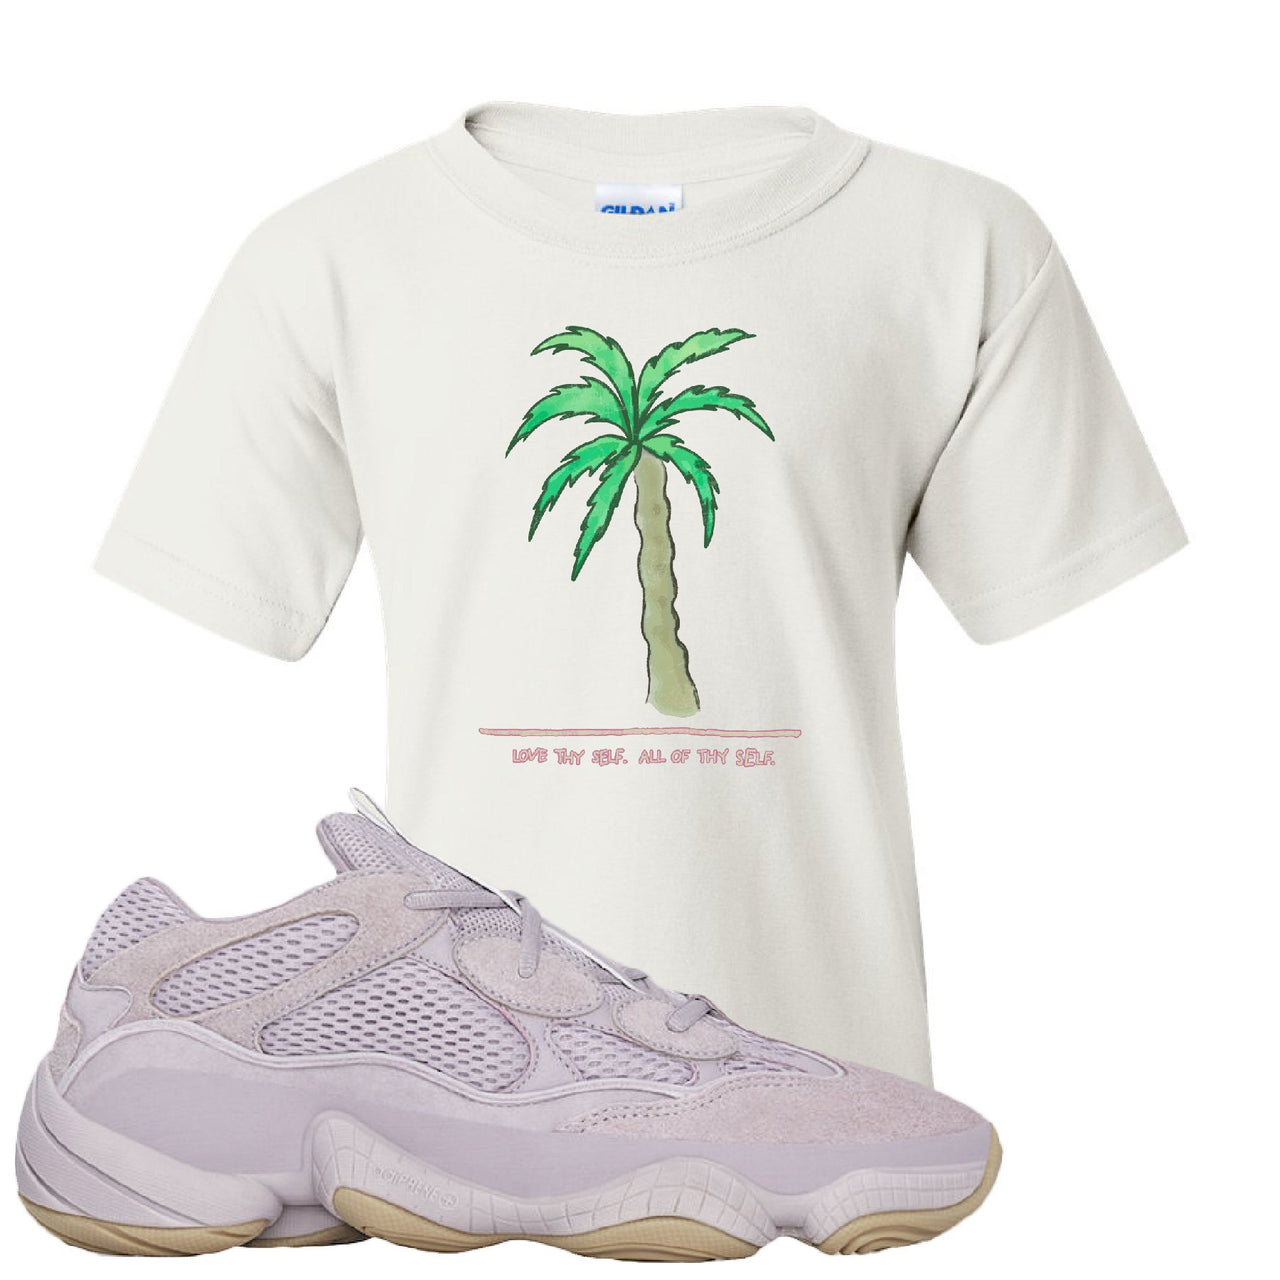 Yeezy 500 Soft Vision Love Thyself Palm White Sneaker Hook Up Kid's T-Shirt